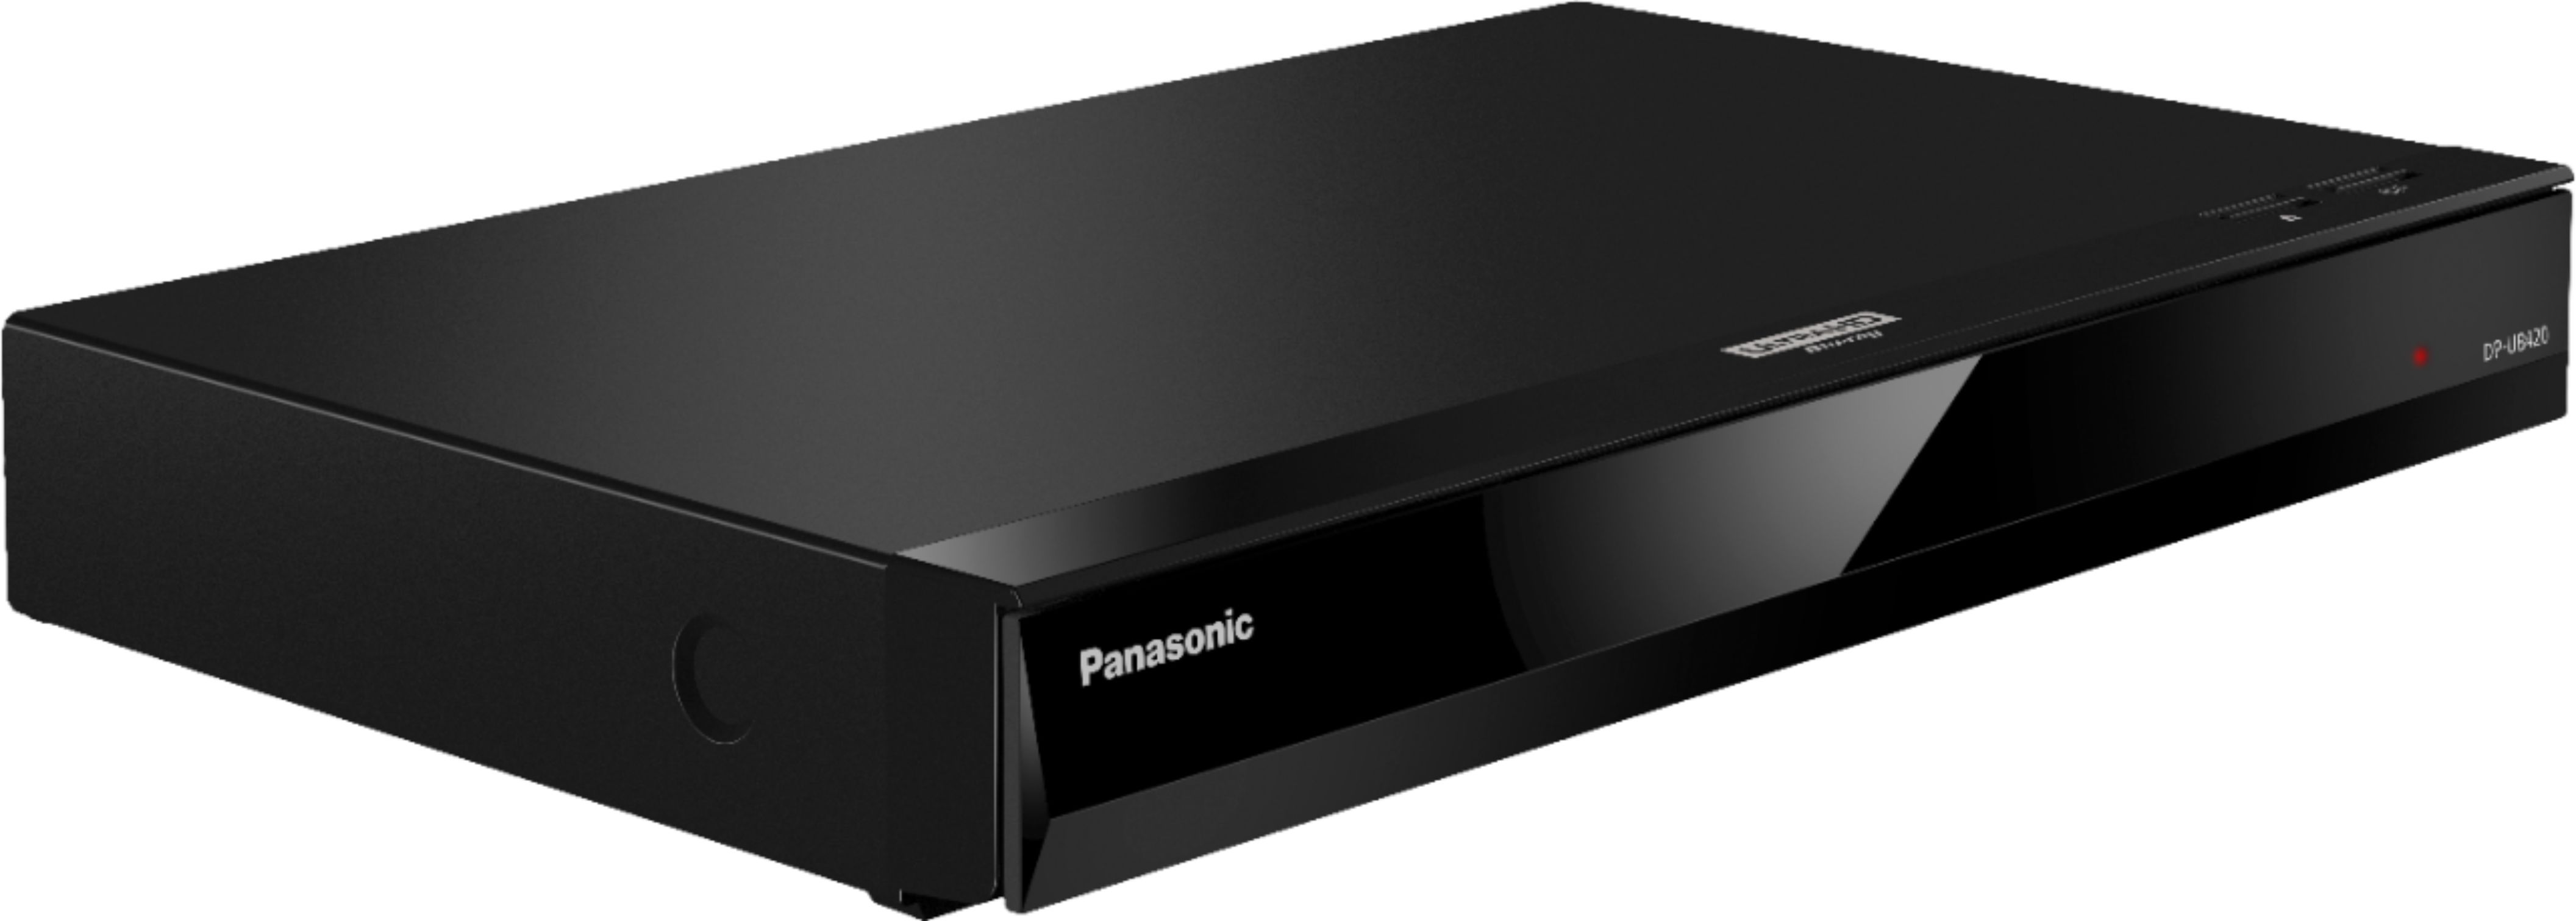 Black Audio Ultra Player, DVD/CD/3D Wi-Fi Best Buy 4K Built-In DP-UB420-K Blu-Ray Panasonic Streaming Hi-Res DP-UB420-K - HD